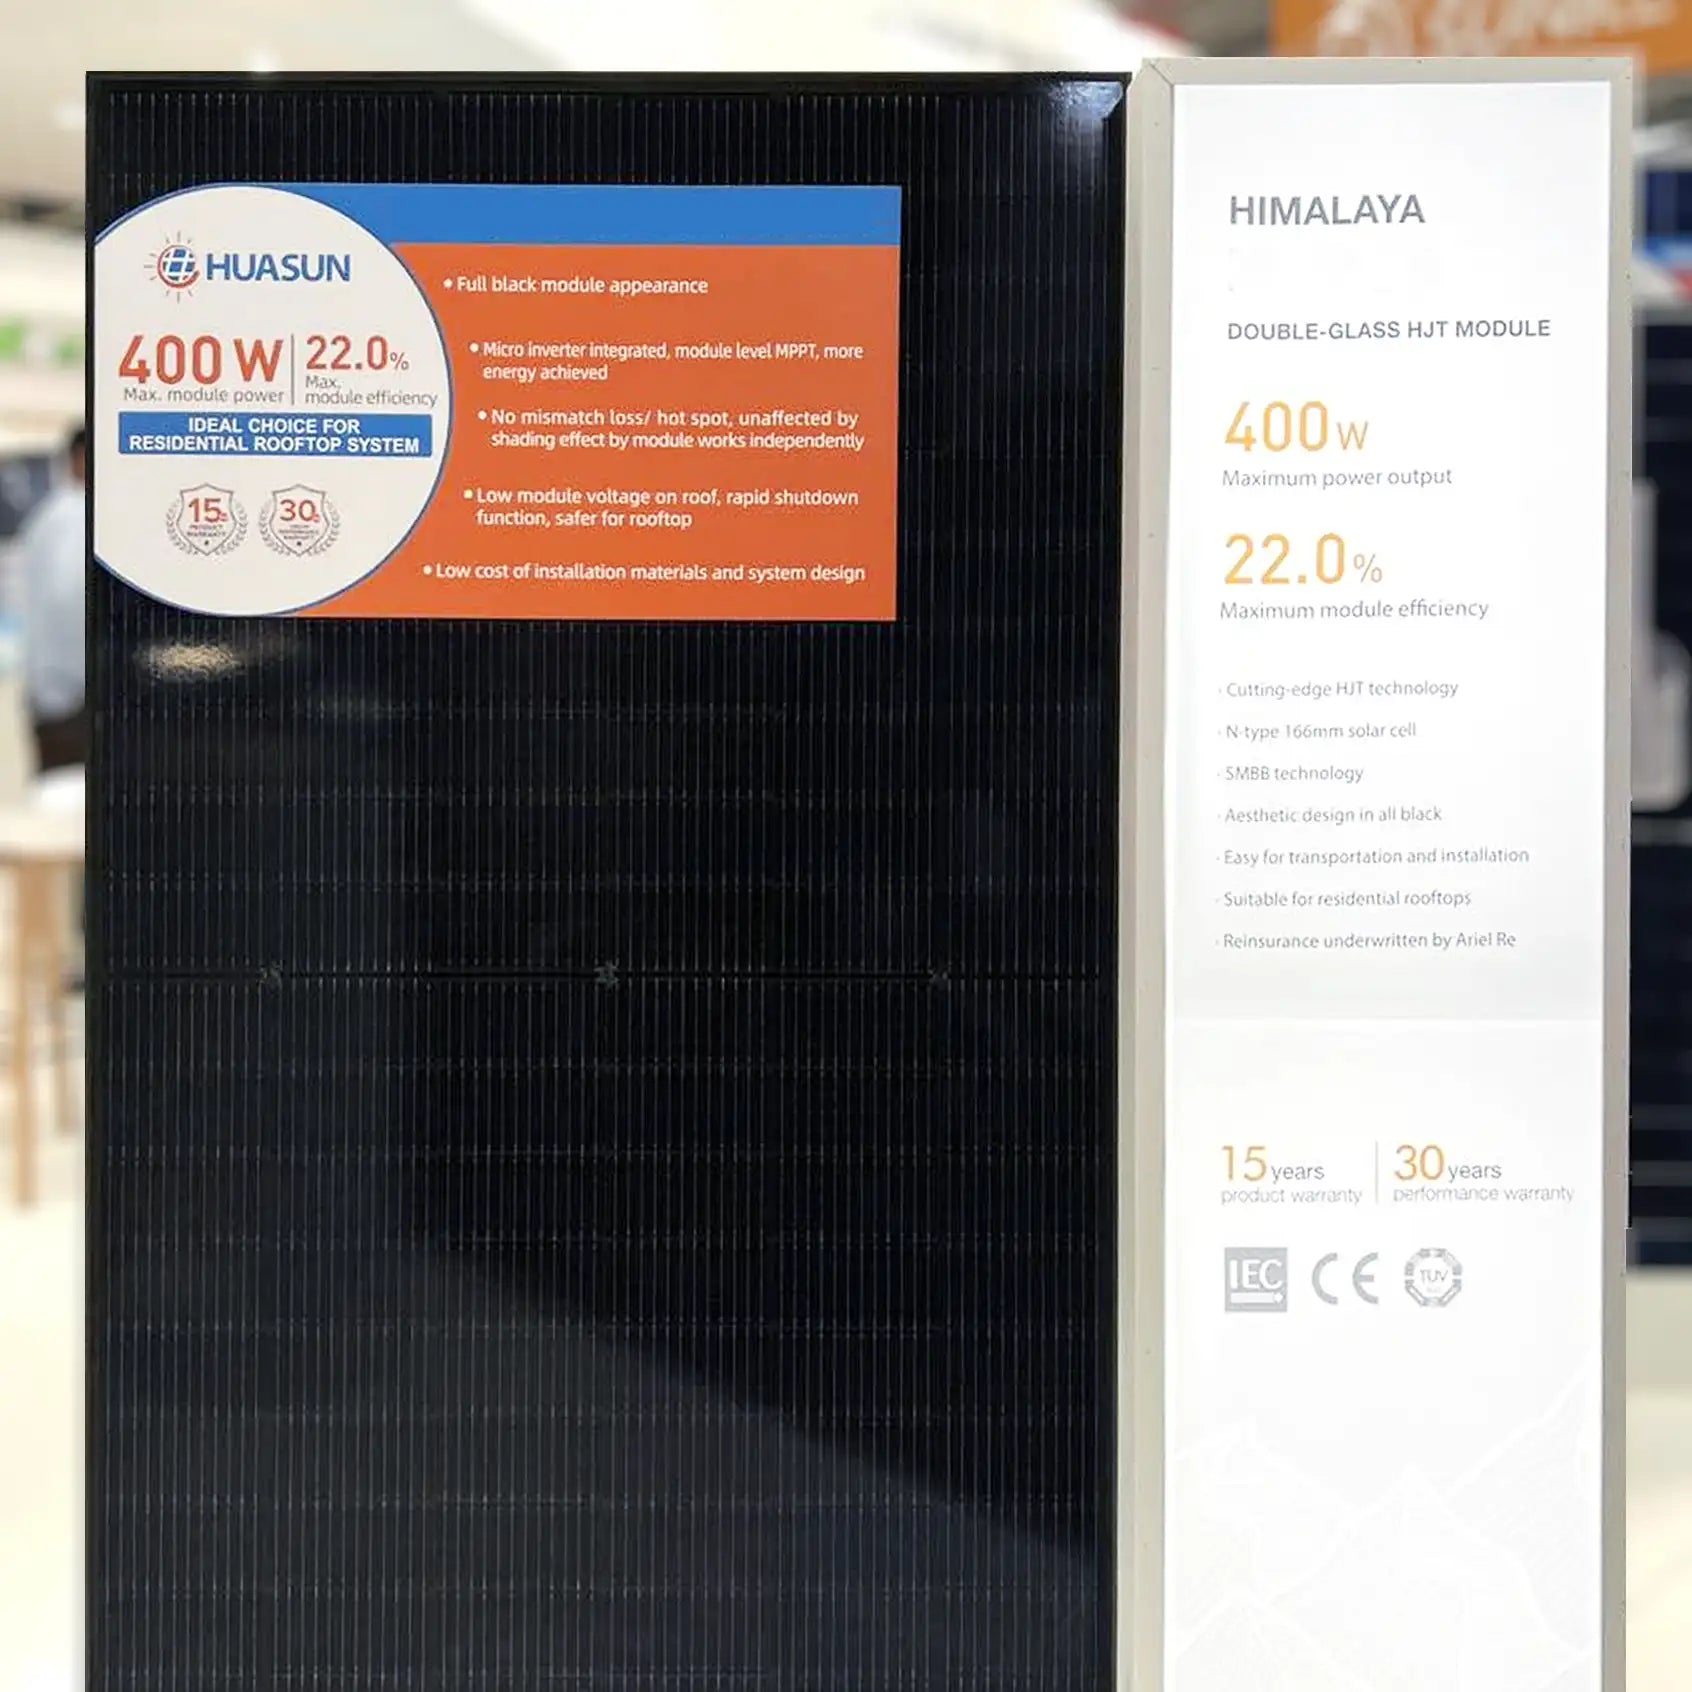 Panel solar bificial de vidrio MSMDxxxM400-HJT6DSB de 120W